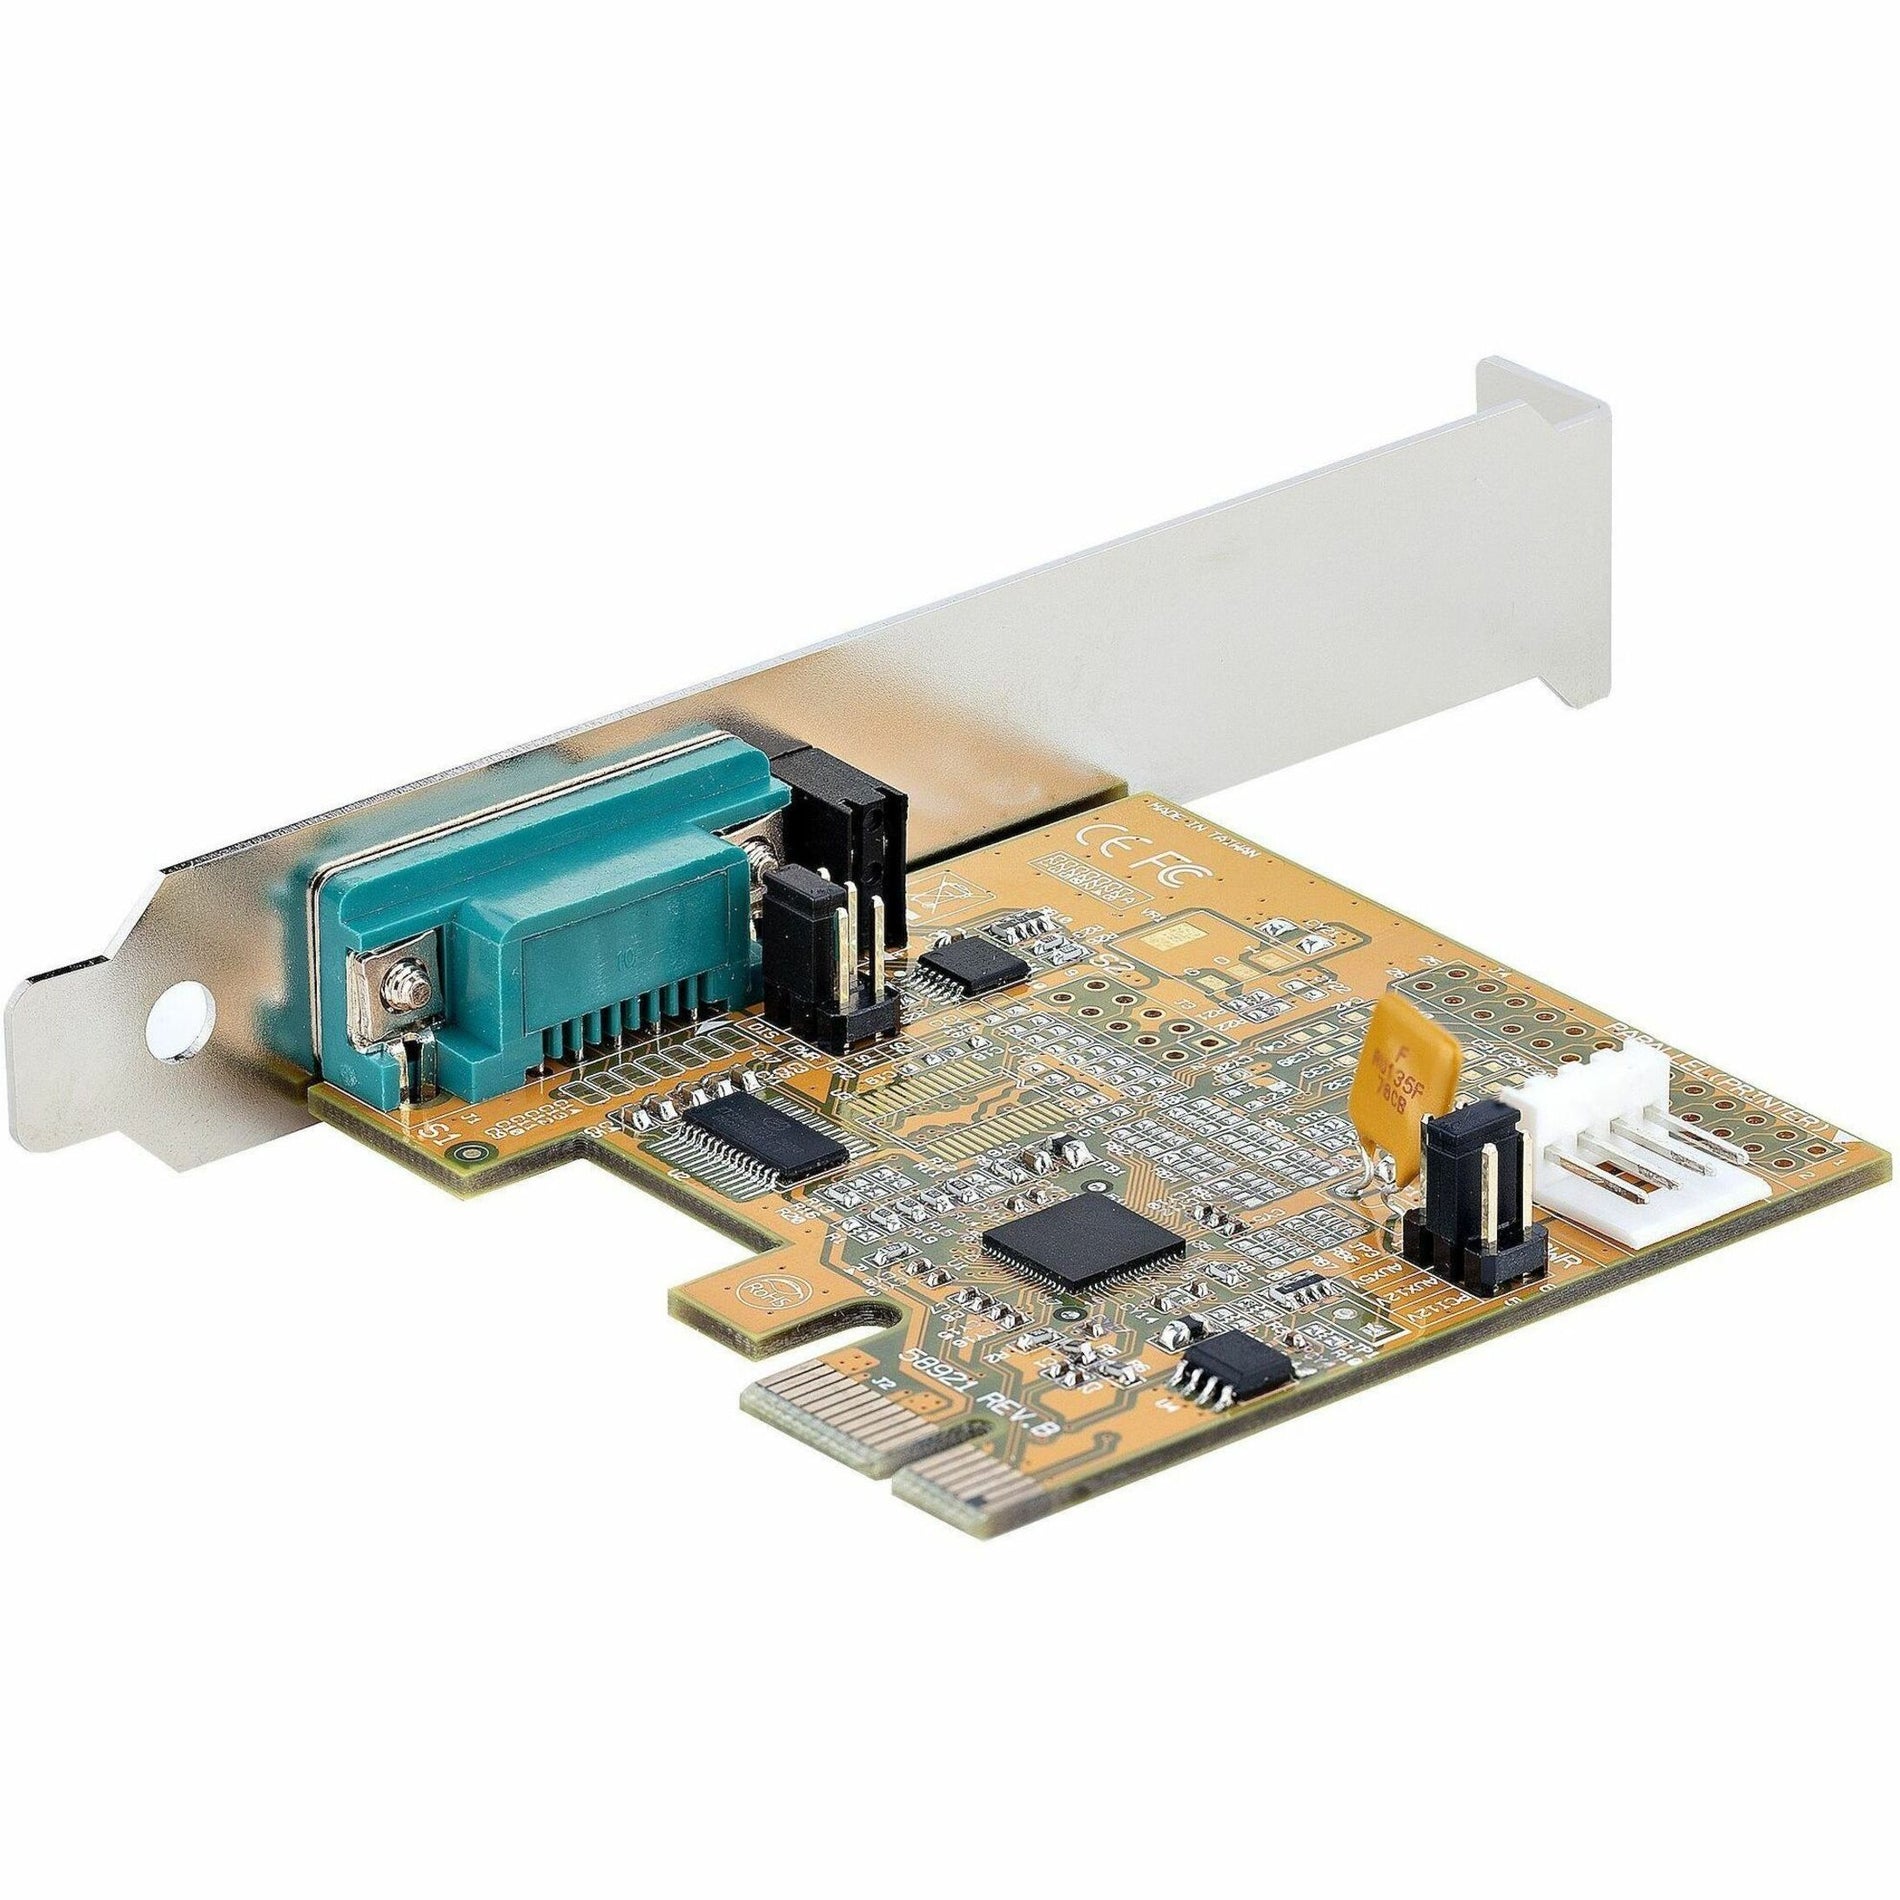 StarTech.com 11050-PC-SERIAL-CARD PCIe Serial Card, 1 External Serial Port, 2-Year Warranty